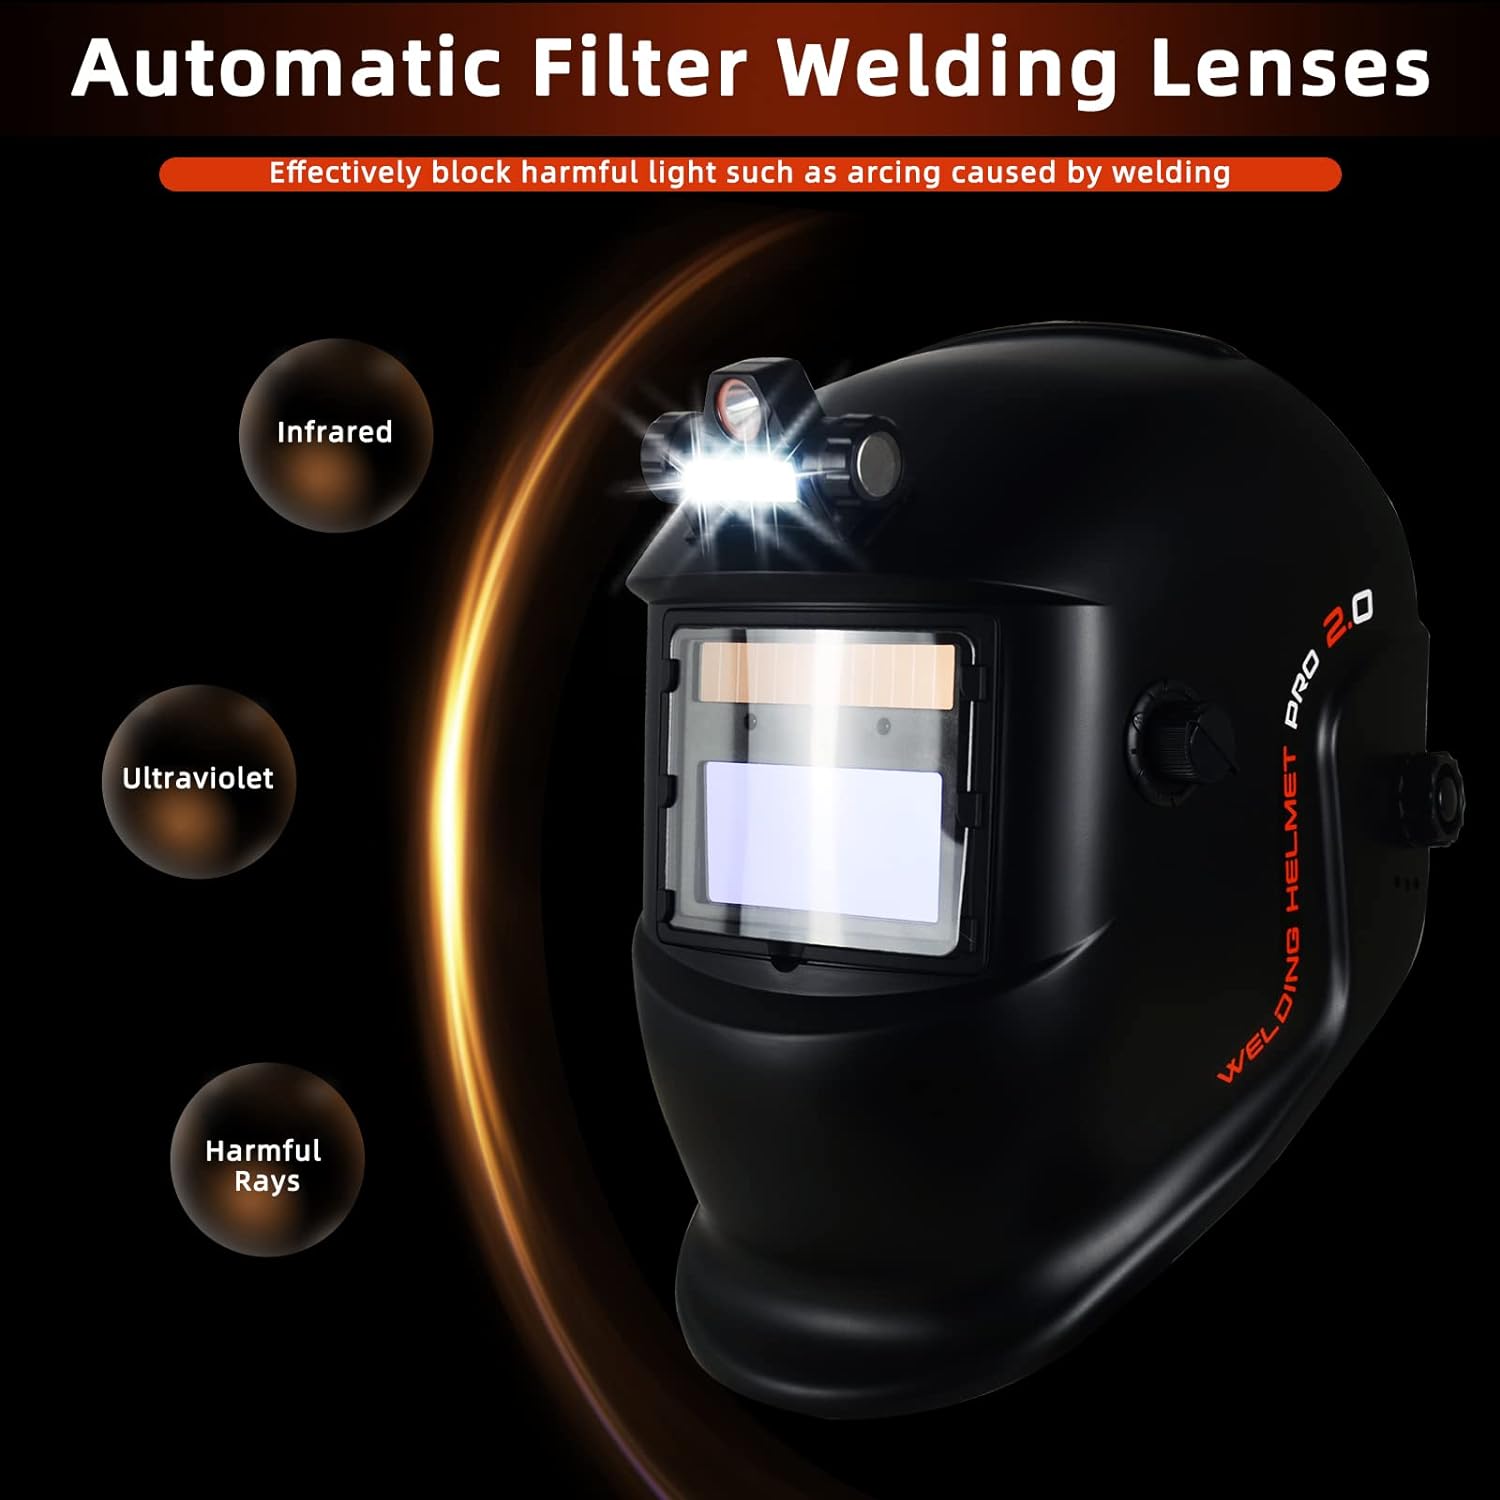 Generic Welding Helmet Auto Darkening with LED Light - TRQWH True Color Solar Powered Welding Hood with 2 Arc Sensor Adjustable Wide Sh